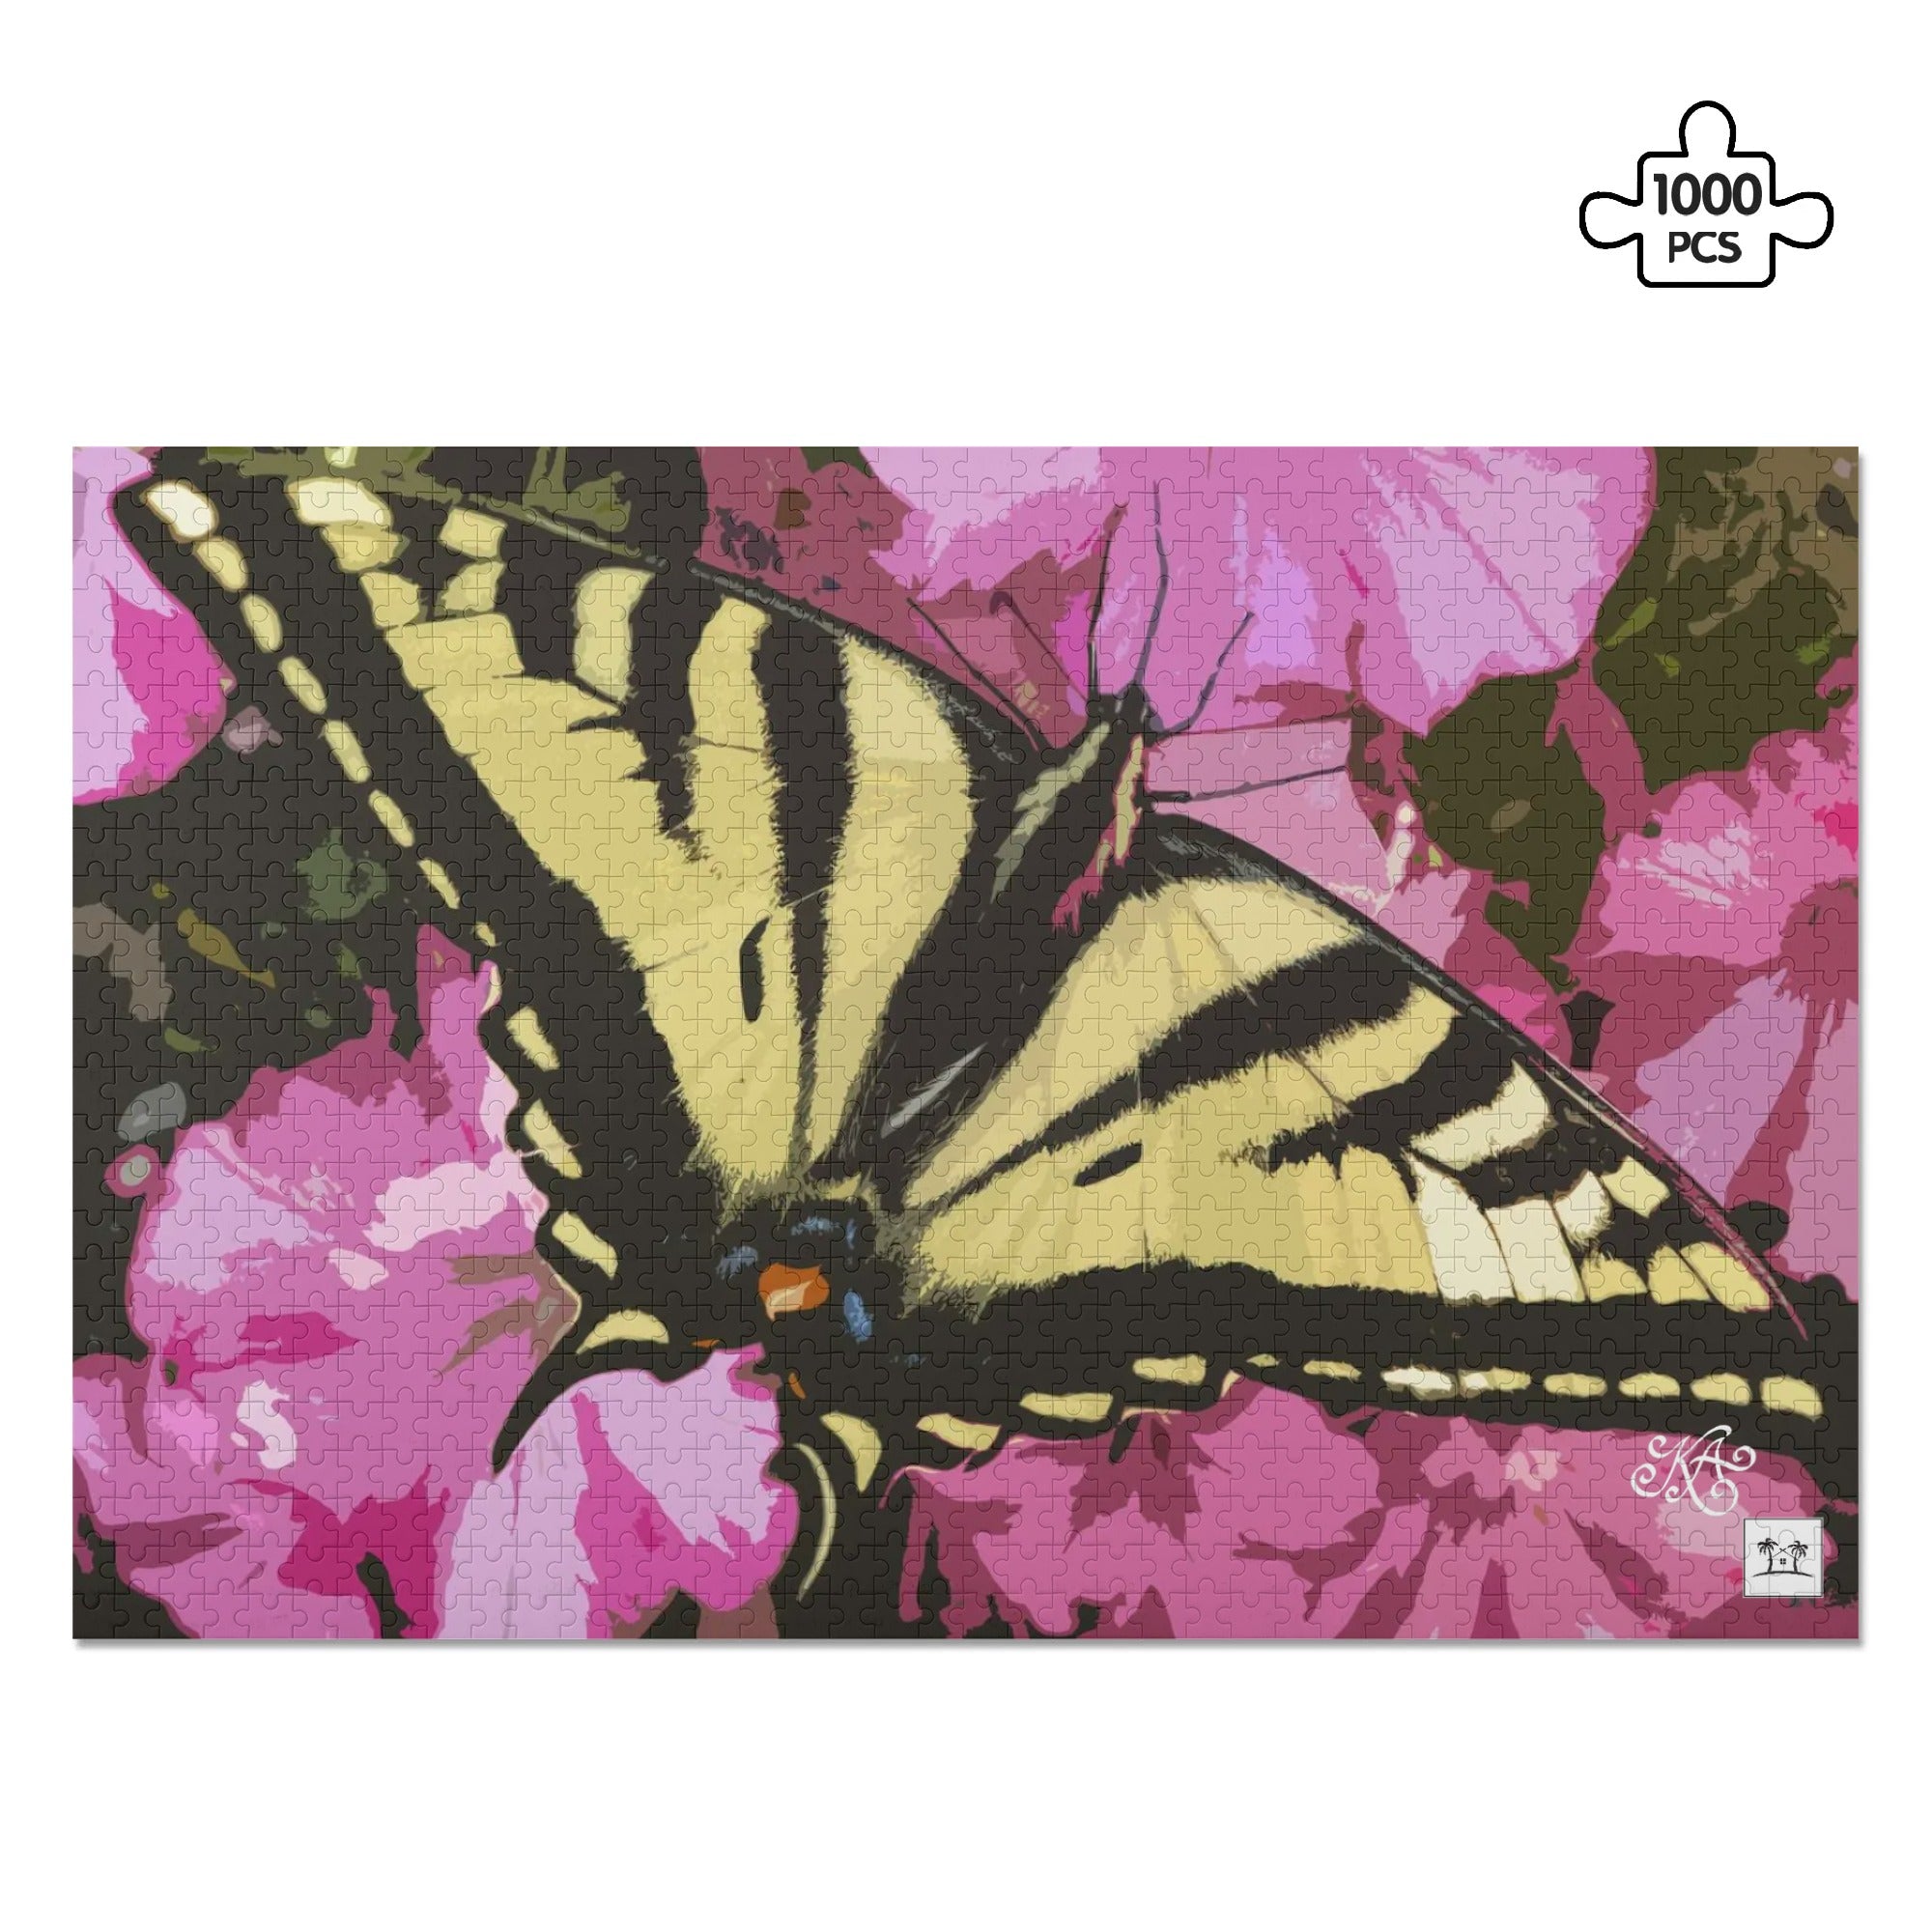 Wooden Jigsaw Puzzle (1000 Pcs) - Swallowtail